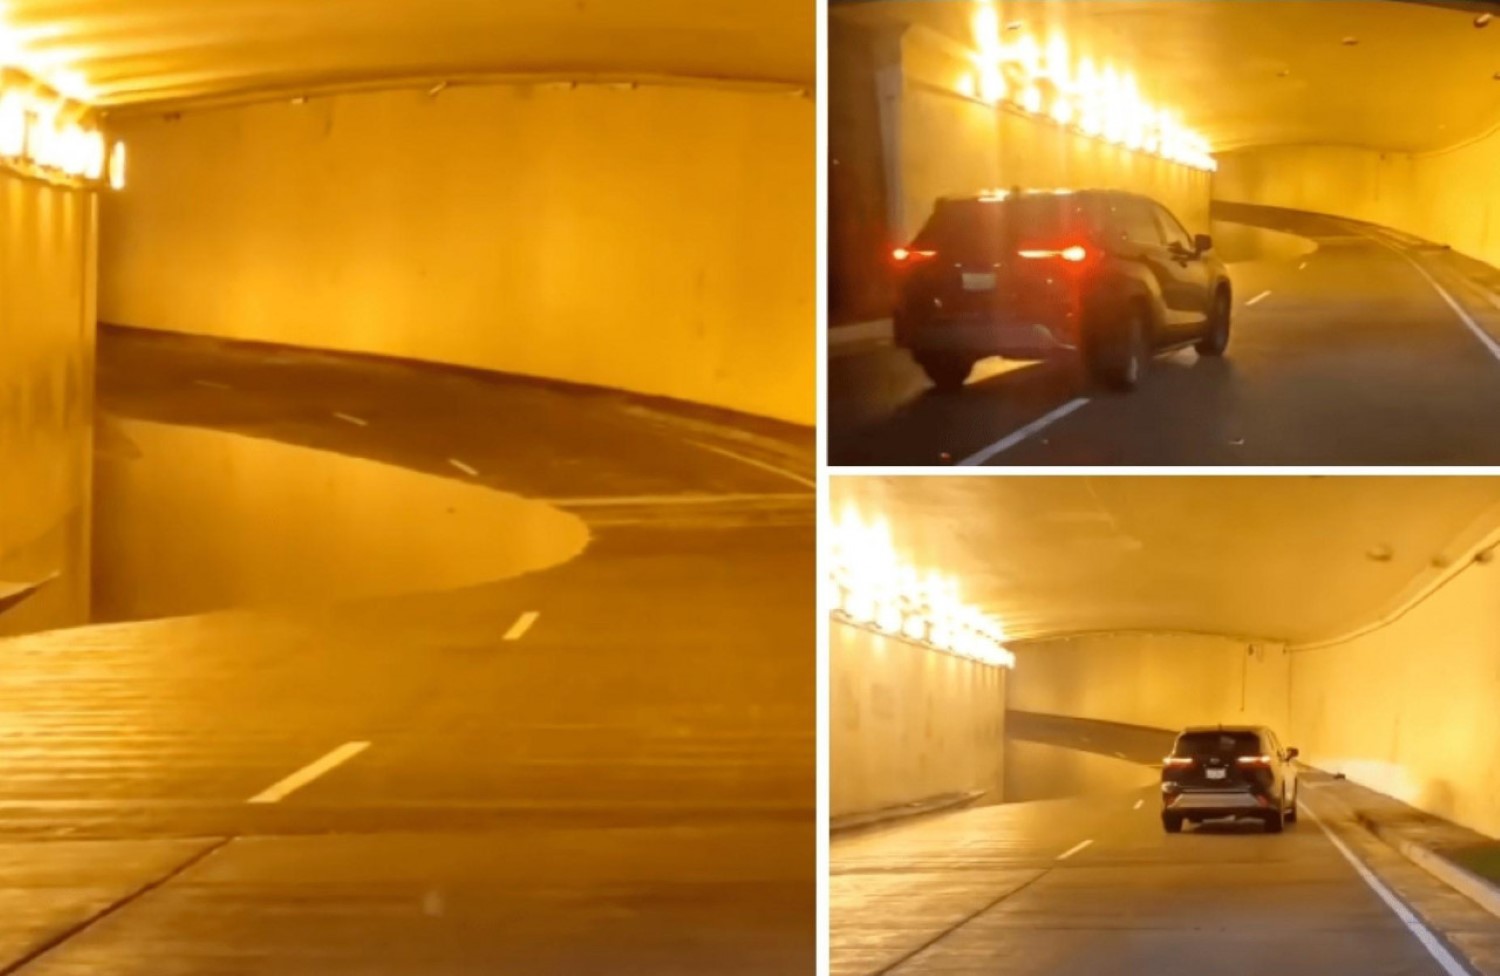 Невидена „хорор сцена“ среде тунел ги запрепастила возачите / ВИДЕО